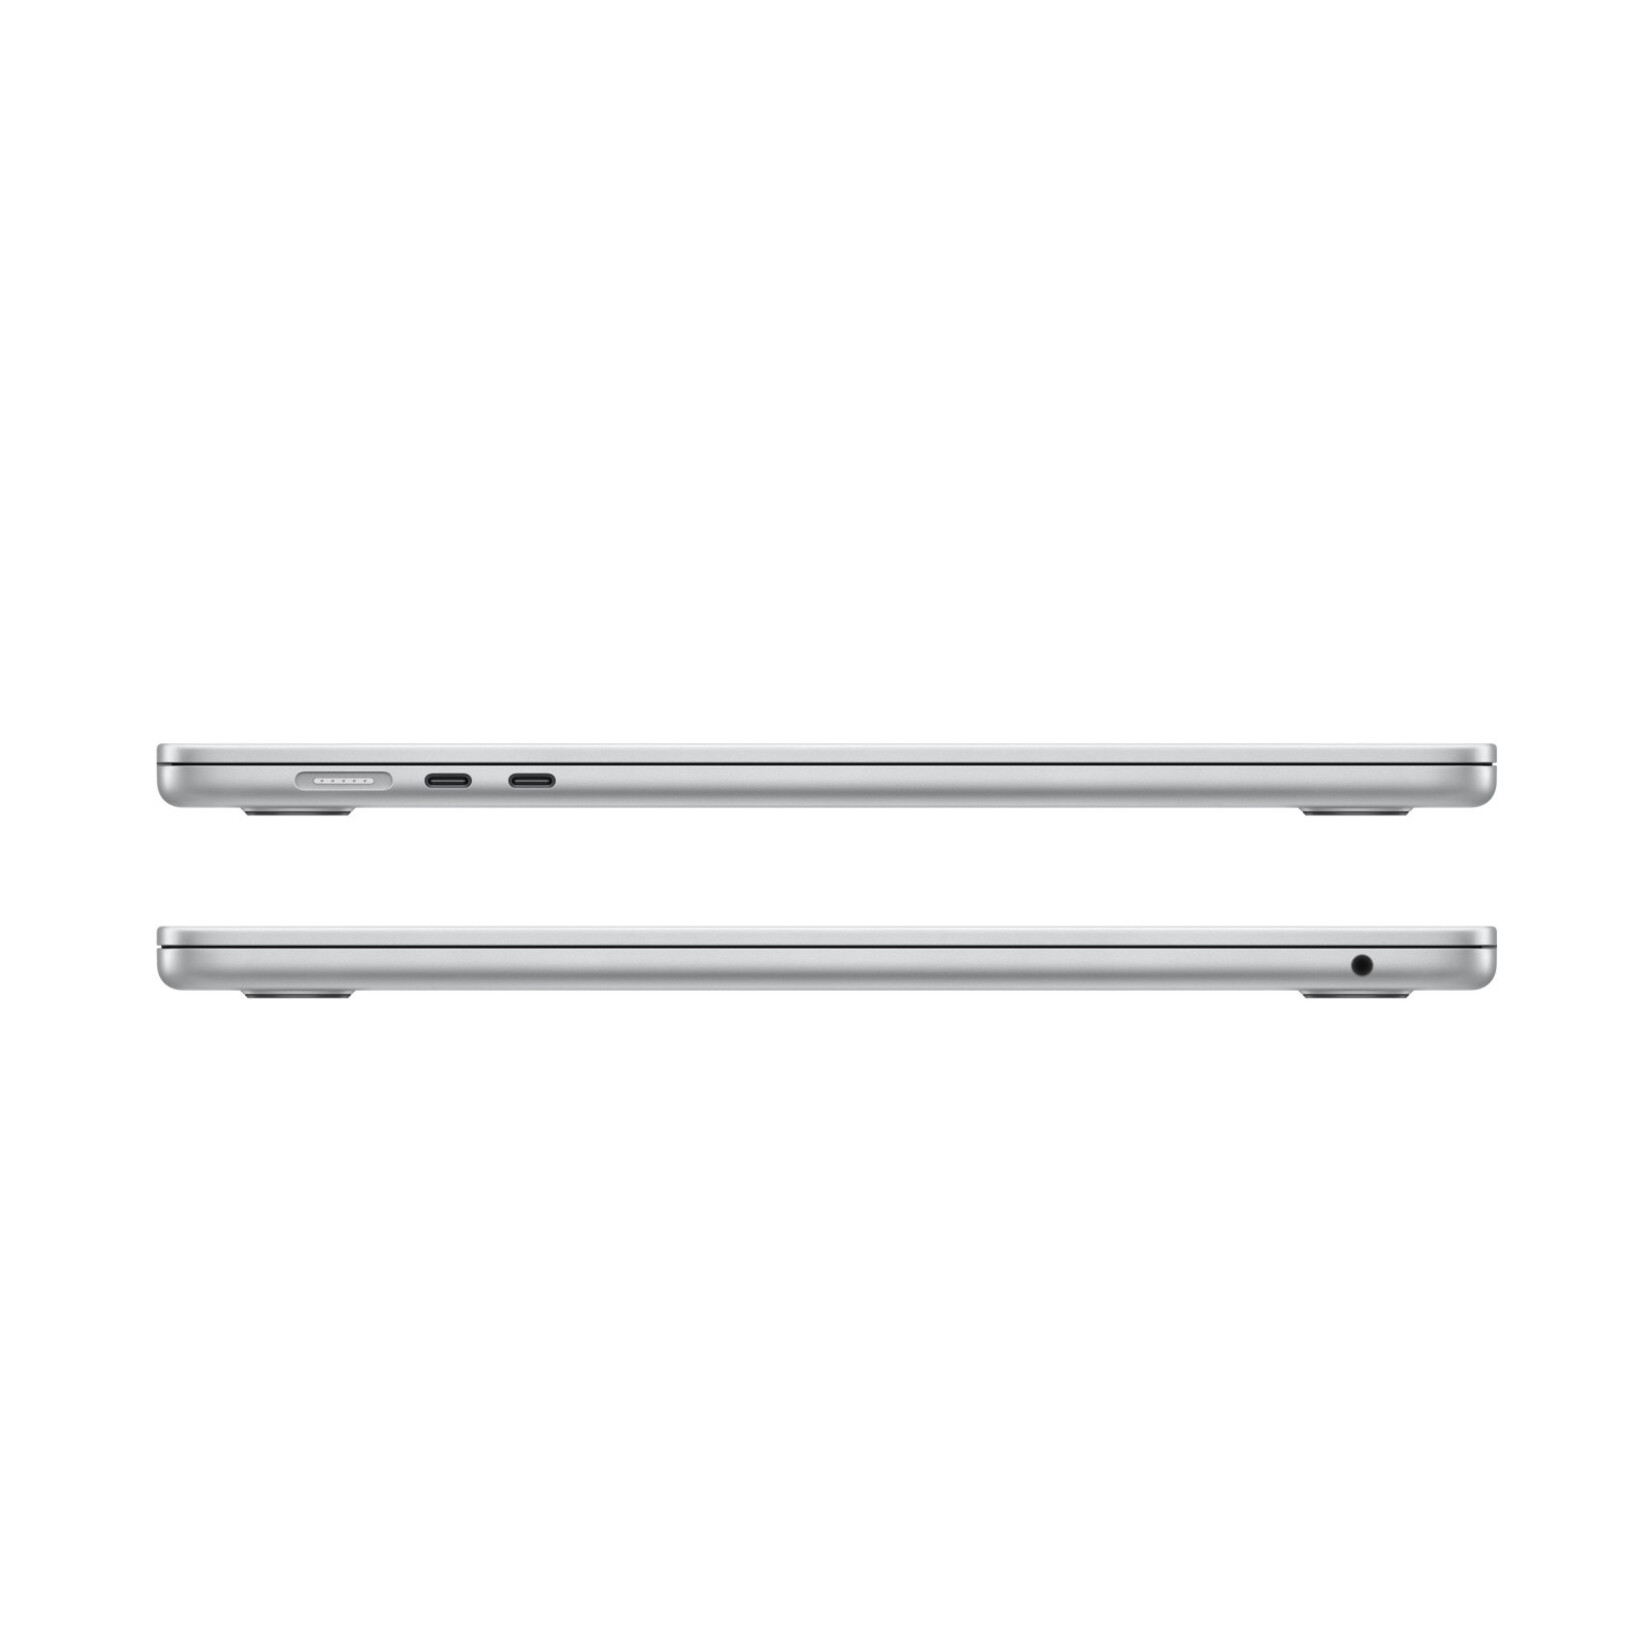 Apple 15-inch MacBook Air - 256GB - Silver